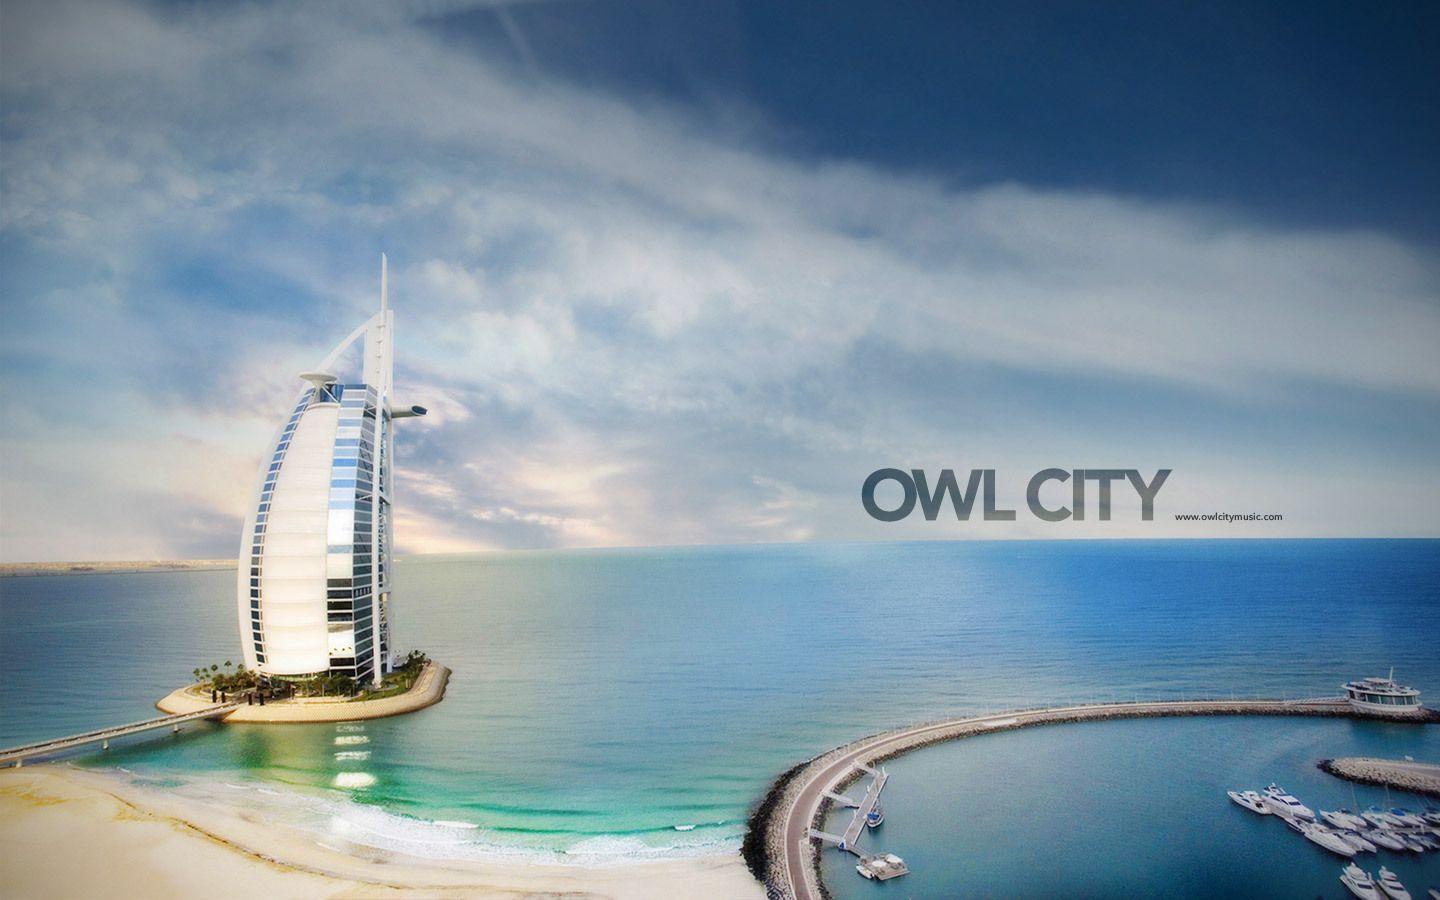 owl_city_owl_